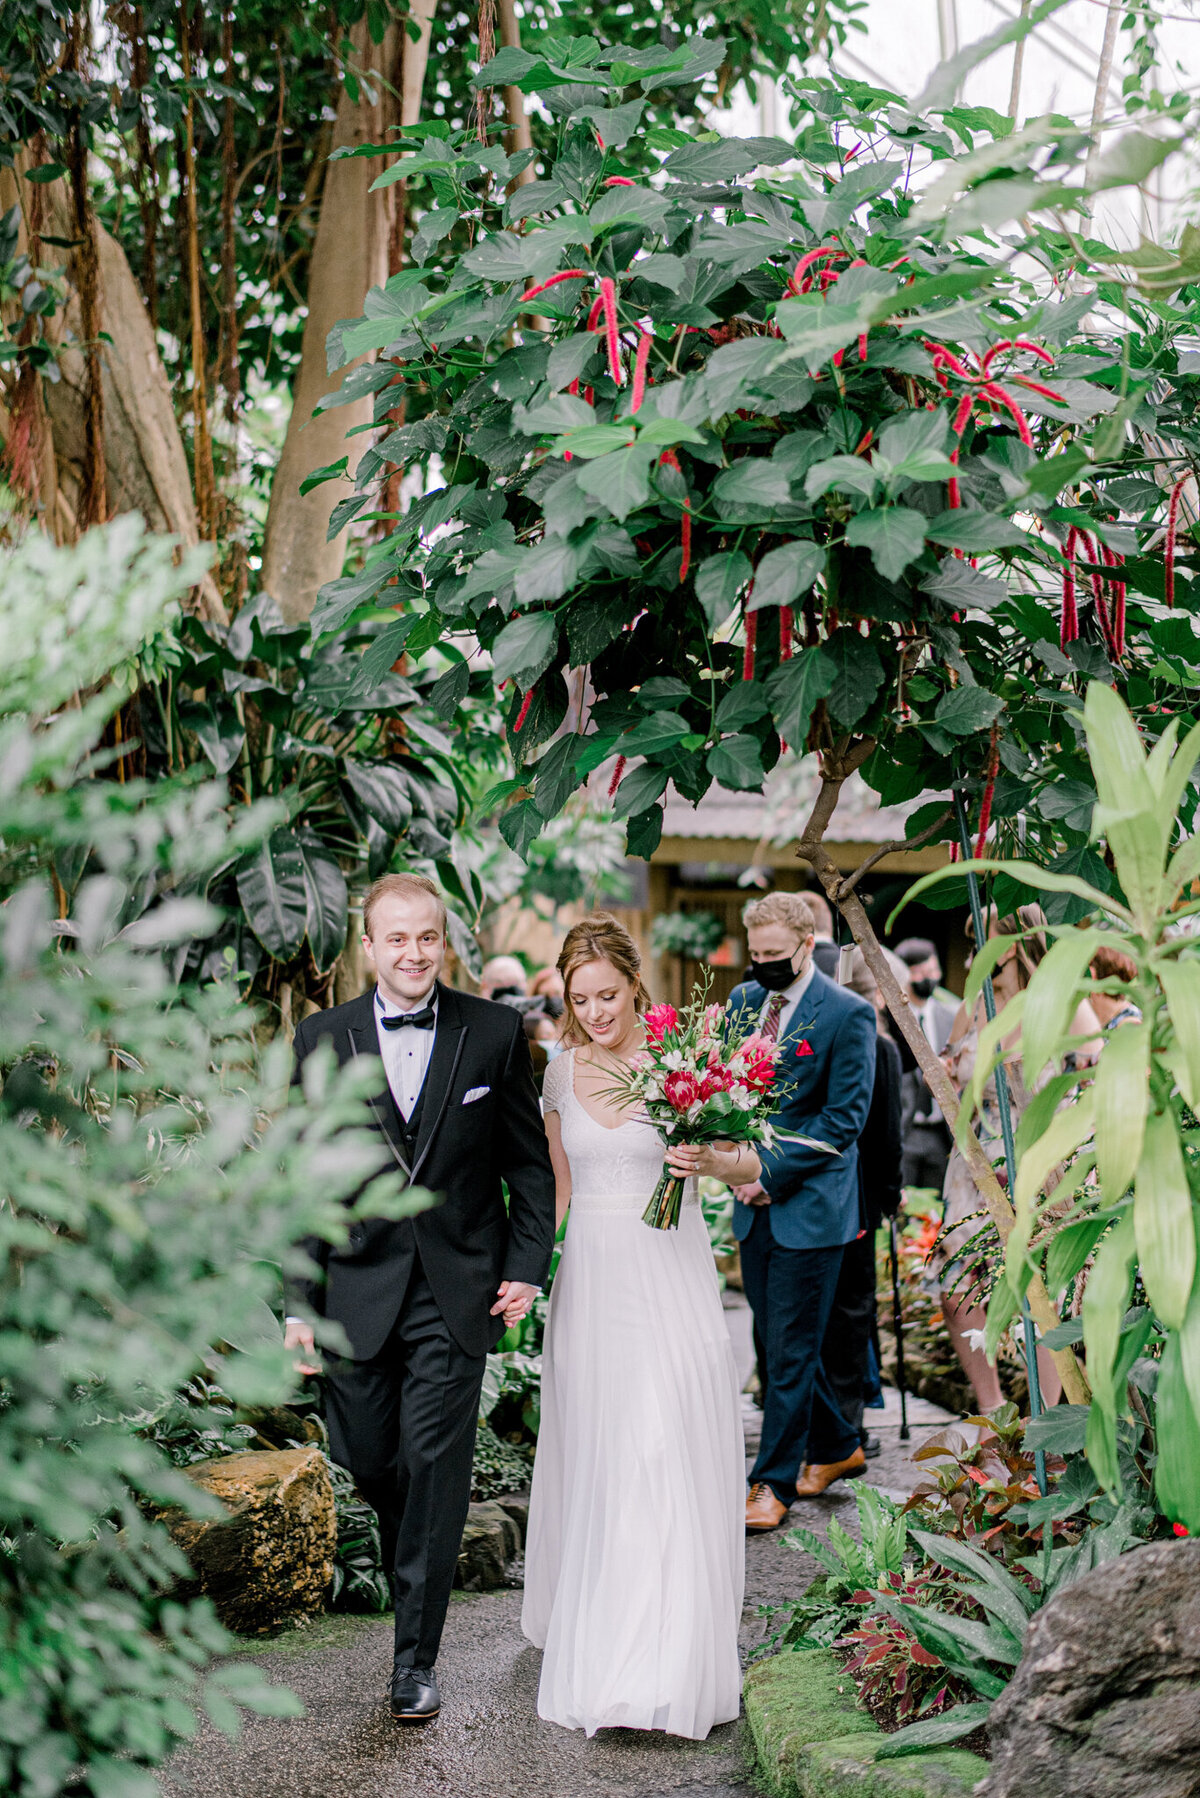 Classic, elegant conservatory greenhouse wedding in Vancouver, captured by Julie Jagt Photography, fine art wedding photographer in Vancouver, BC. Featured on the Bronte Bride Vendor Guide.